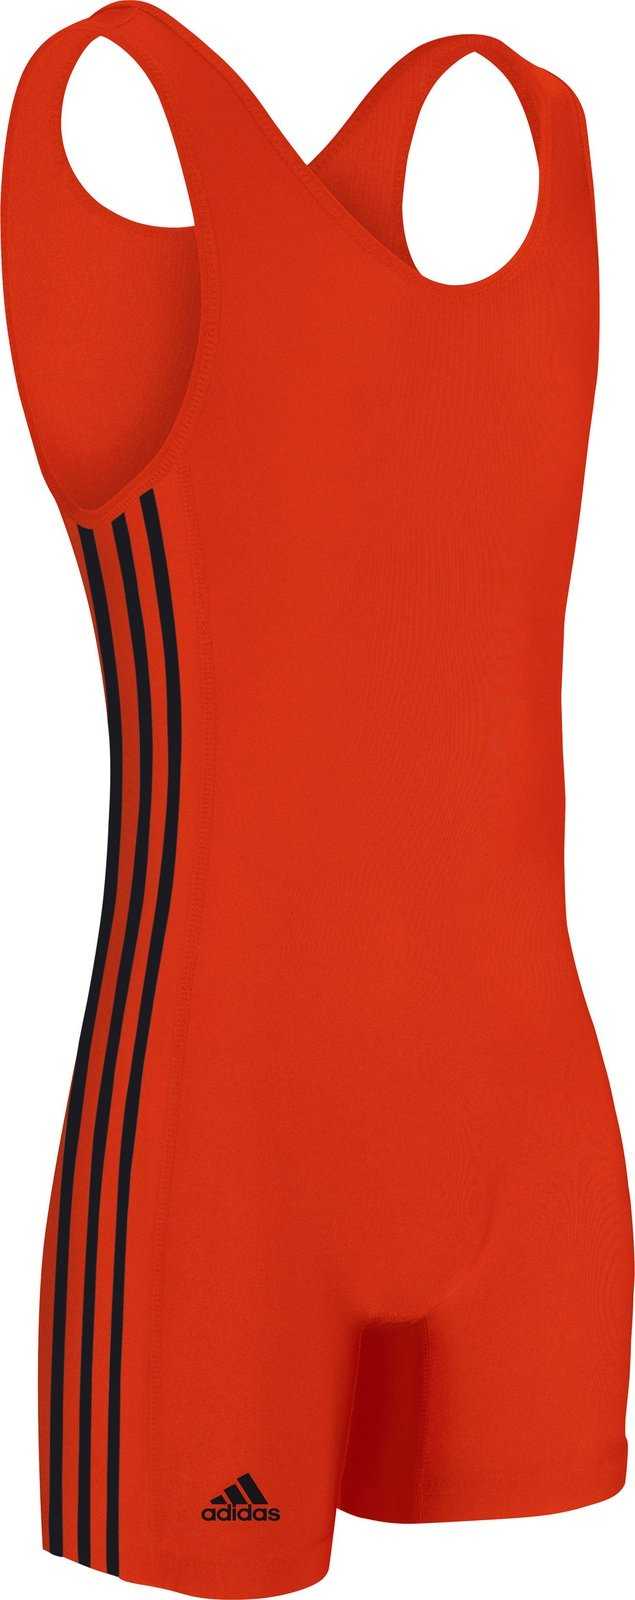 Adidas aS102s 3 Stripe Wrestling Singlet - Orange Black - HIT a Double